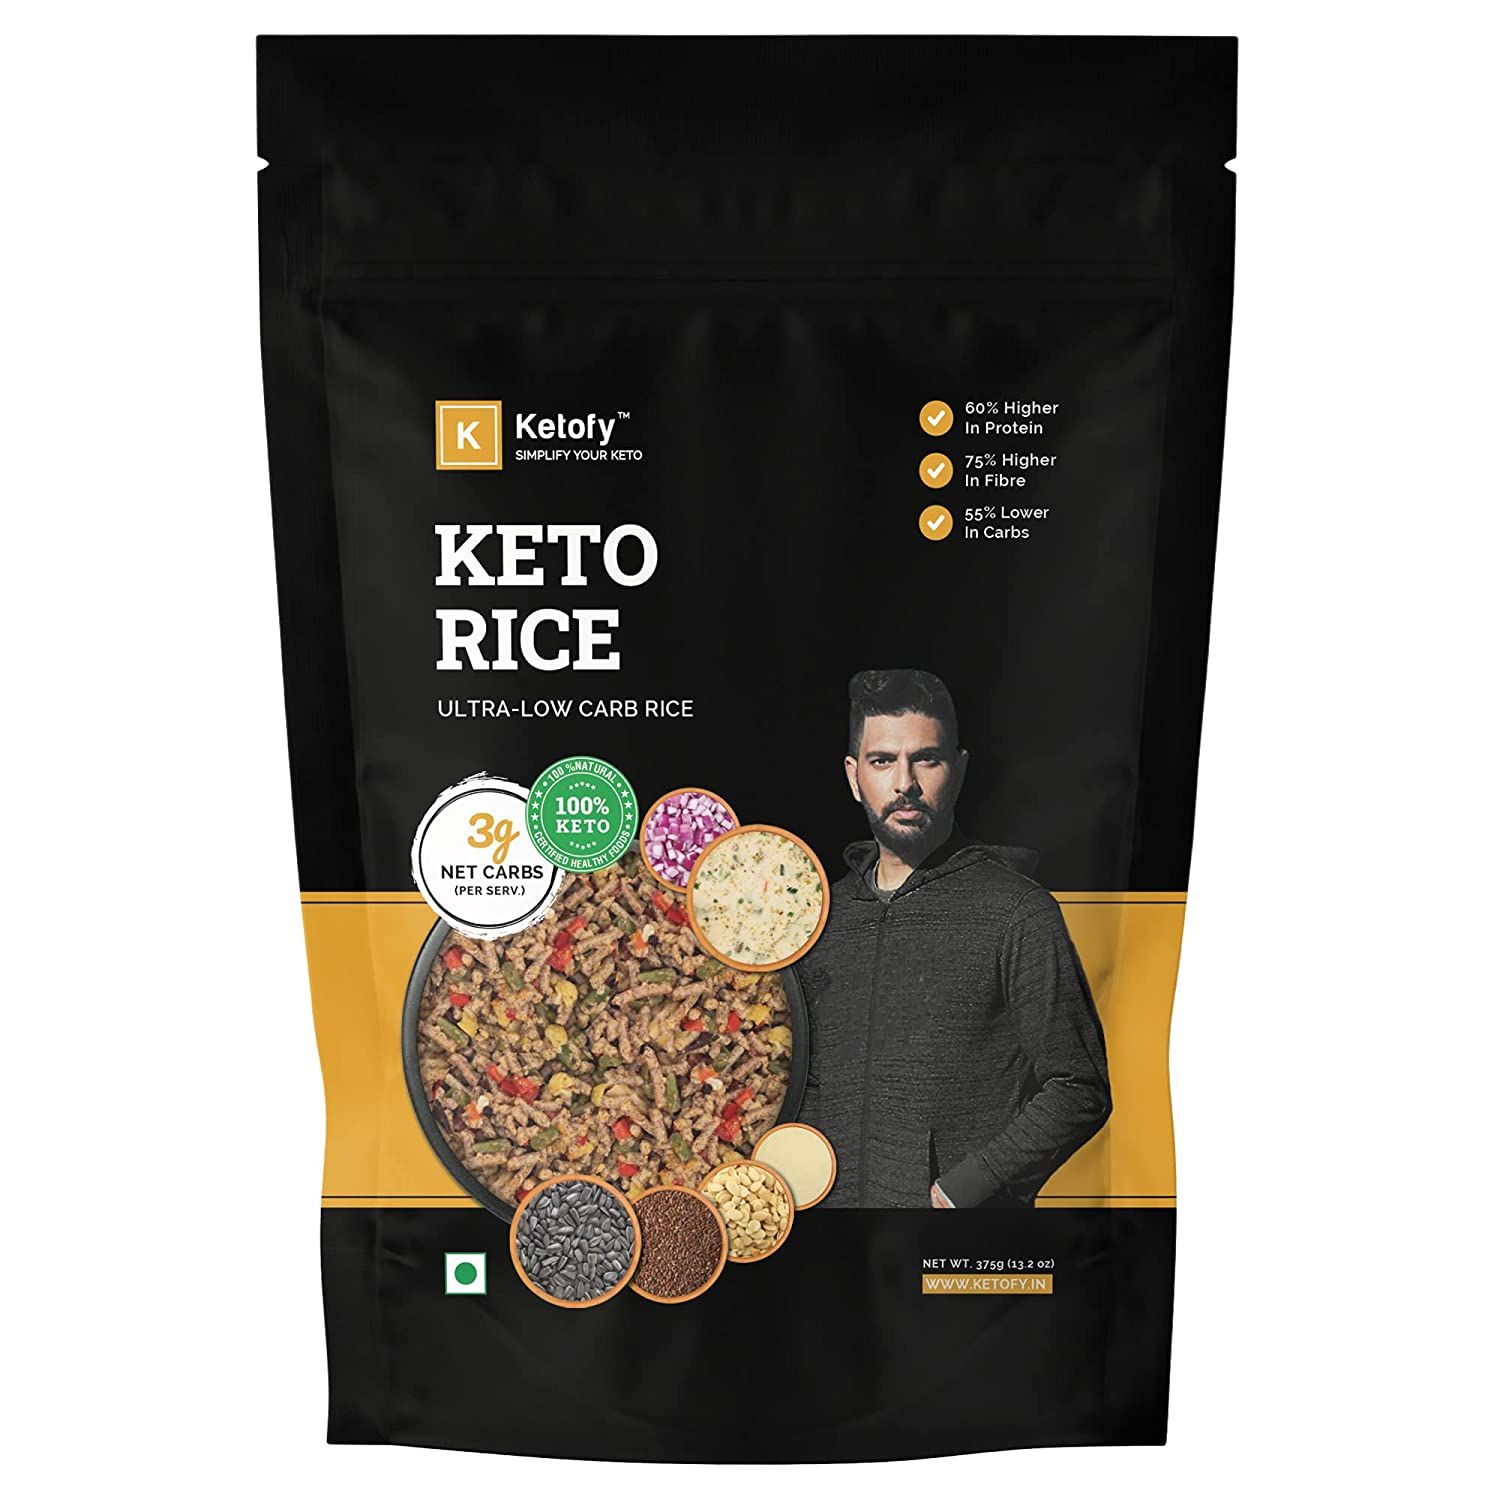 Ketofy Keto Rice Image